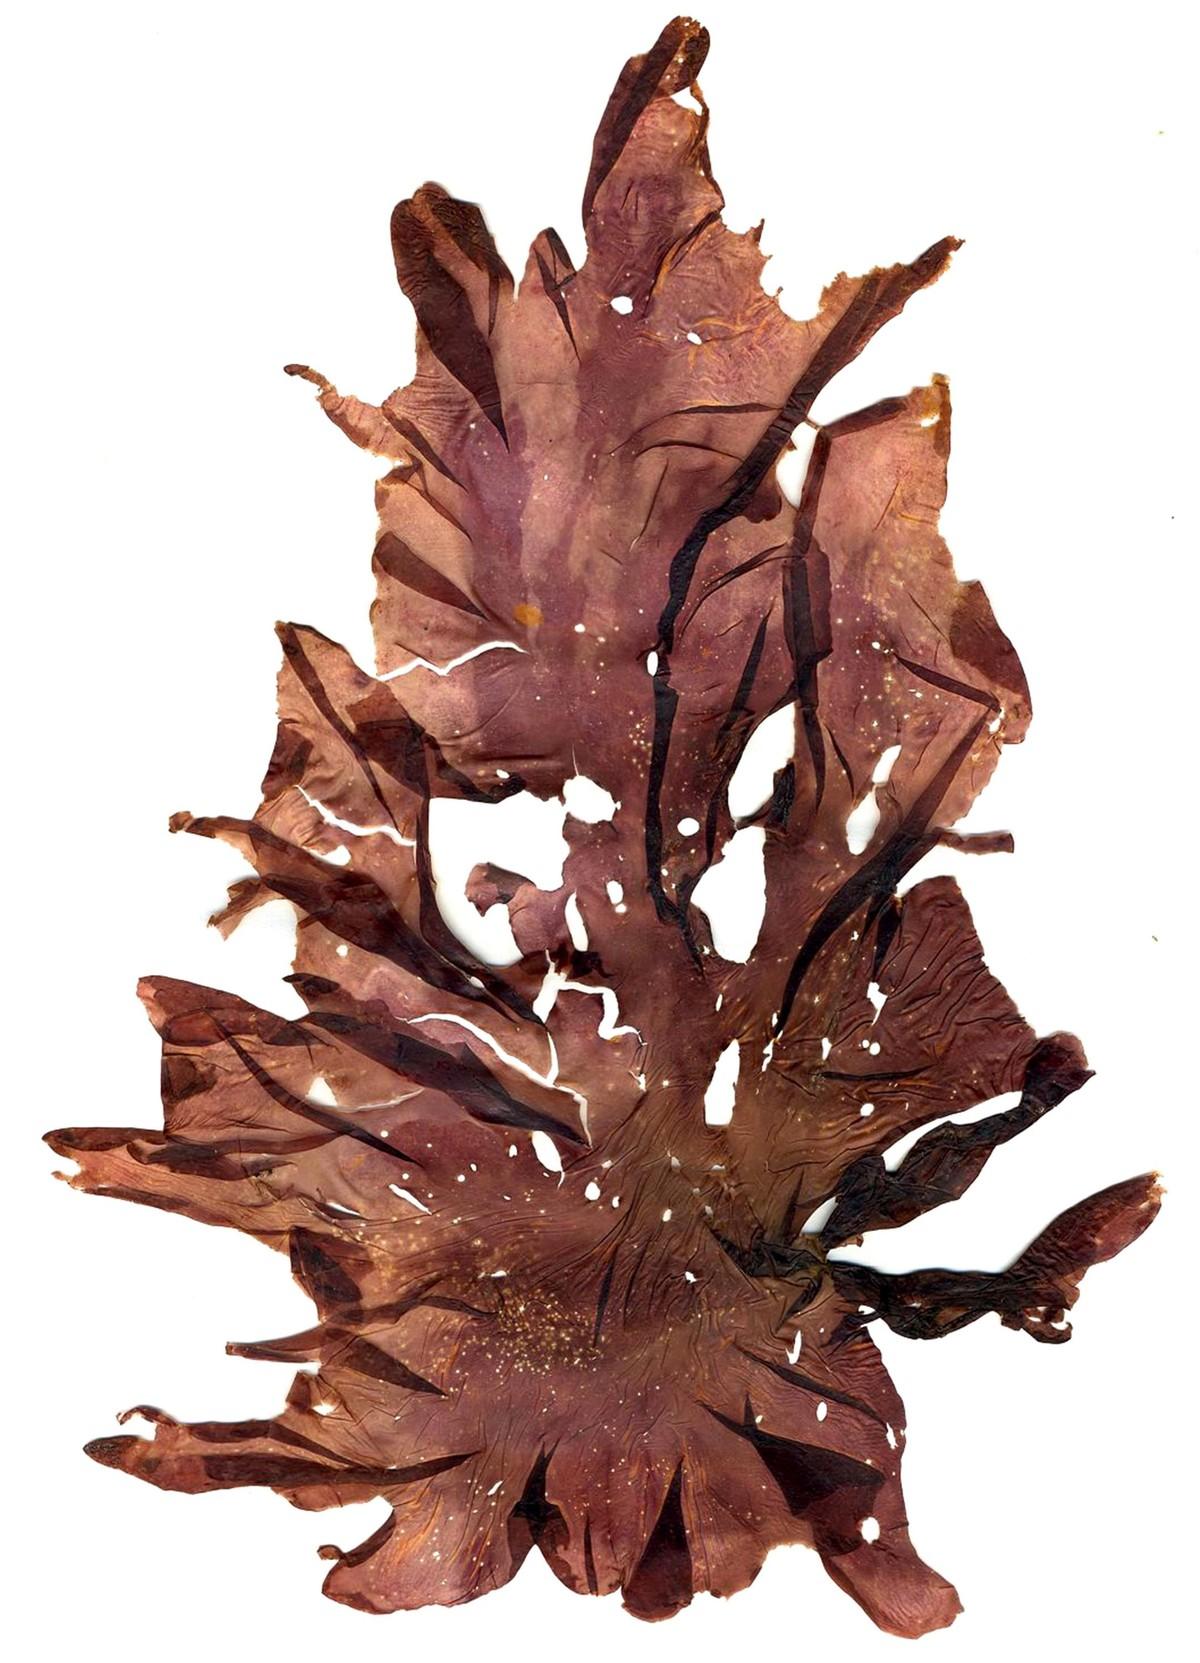  Porphyra, une algue rouge.